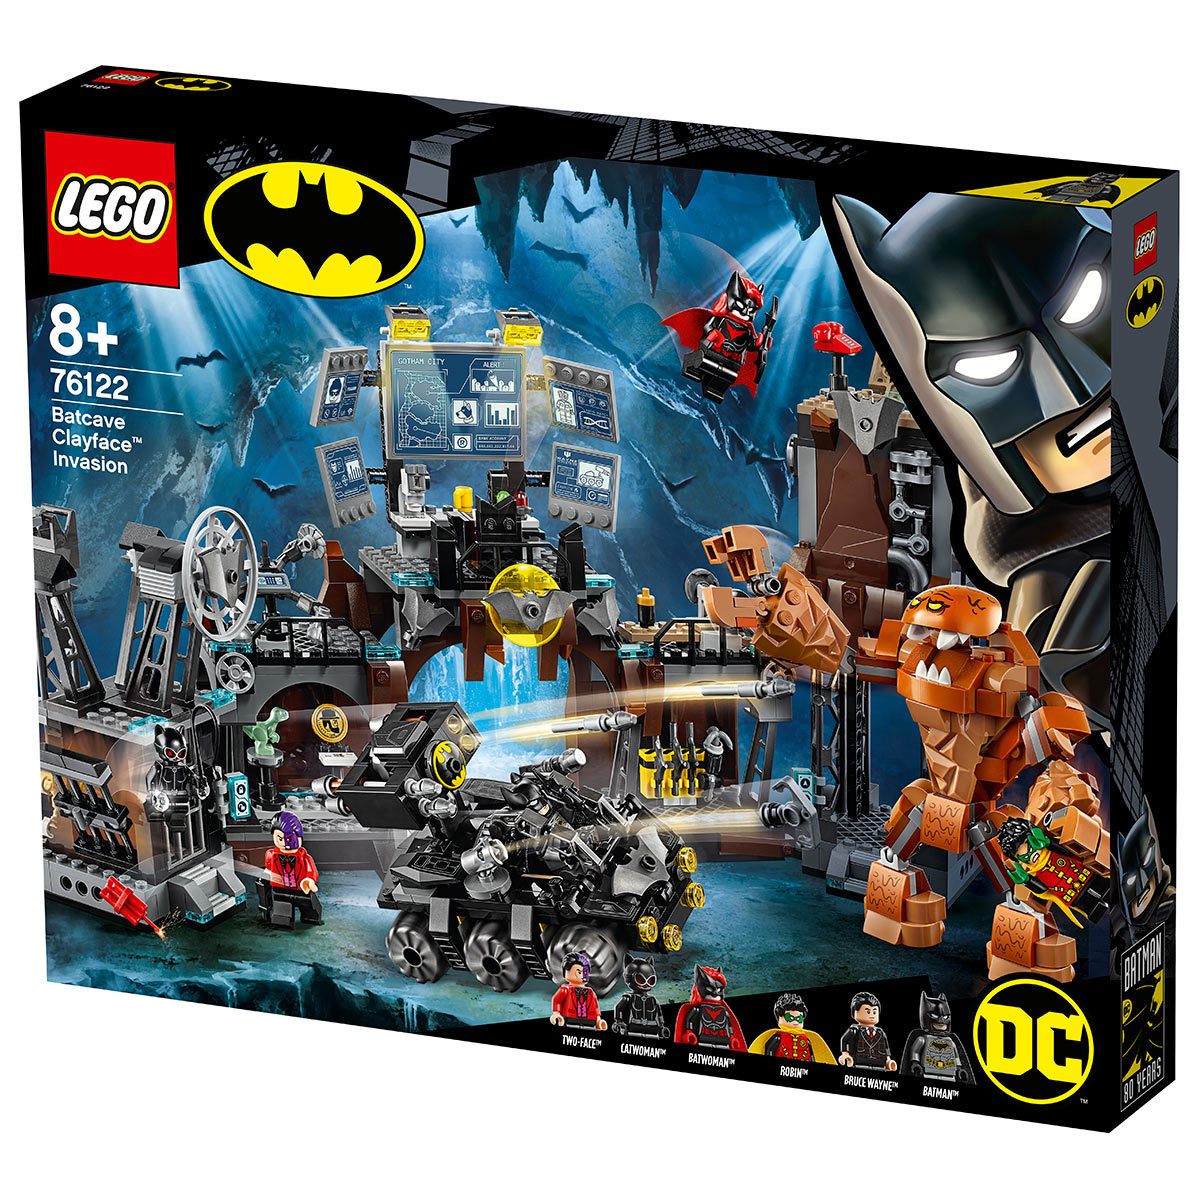 LEGO DC Batman Batcave Clayface Invasion - Model 76122 (8+ Years)